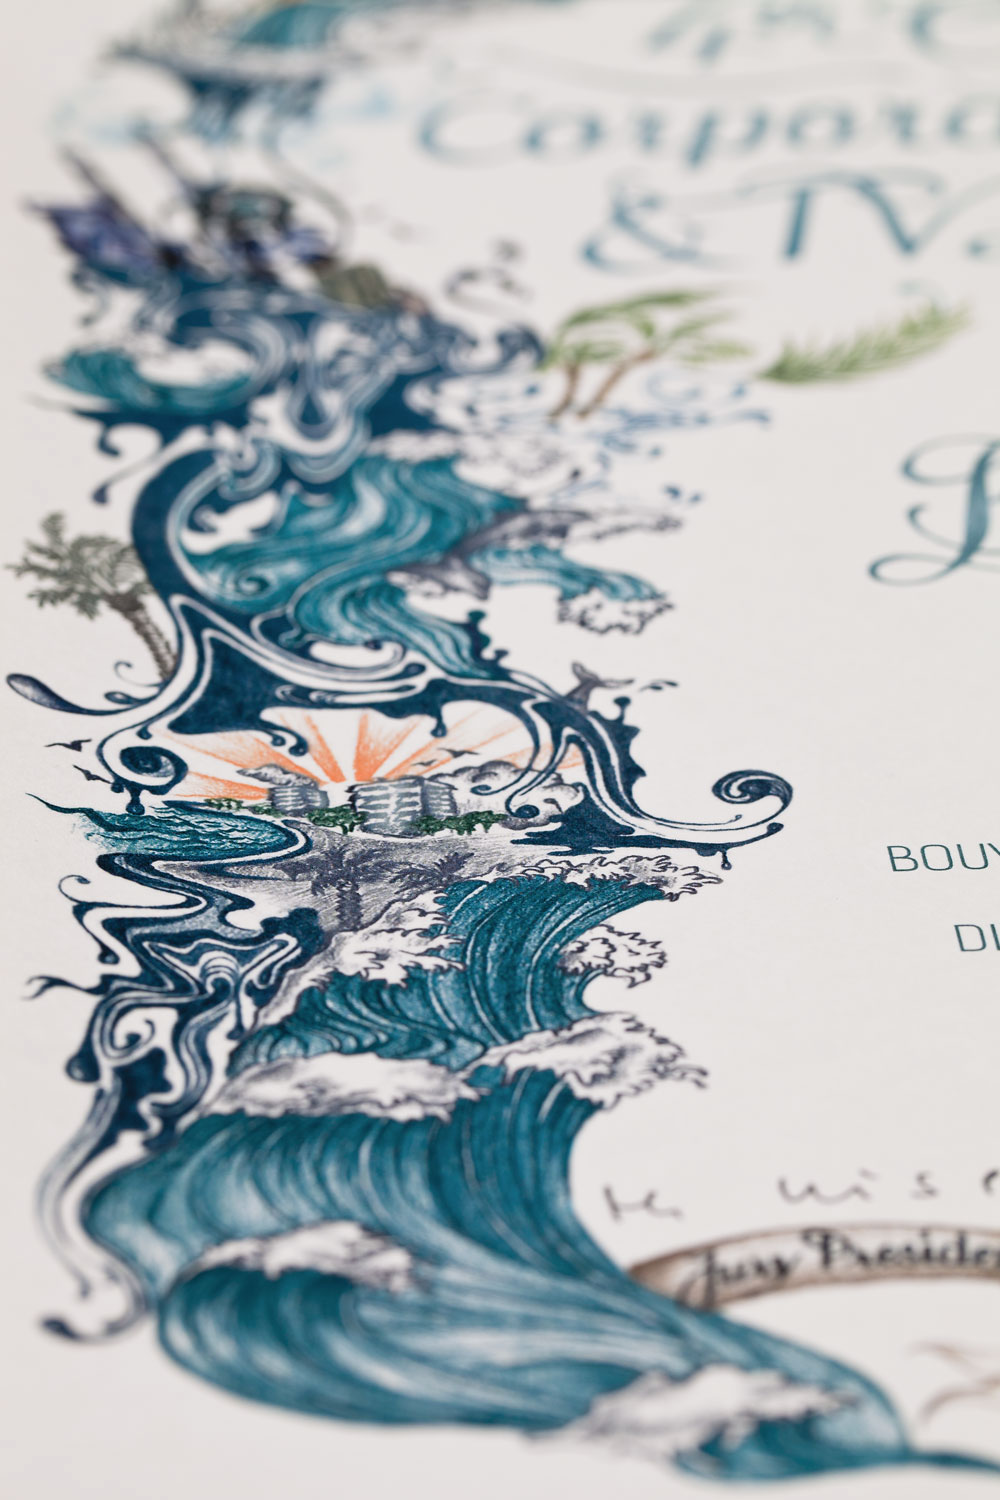 certificate Urkunde lettering typo hand drawing handmade winner Yoanna Lyubenova Sophia Nicoladoni Katrin Bichler Klasse für Ideen die angewandte Cannes Ocean Doplphin